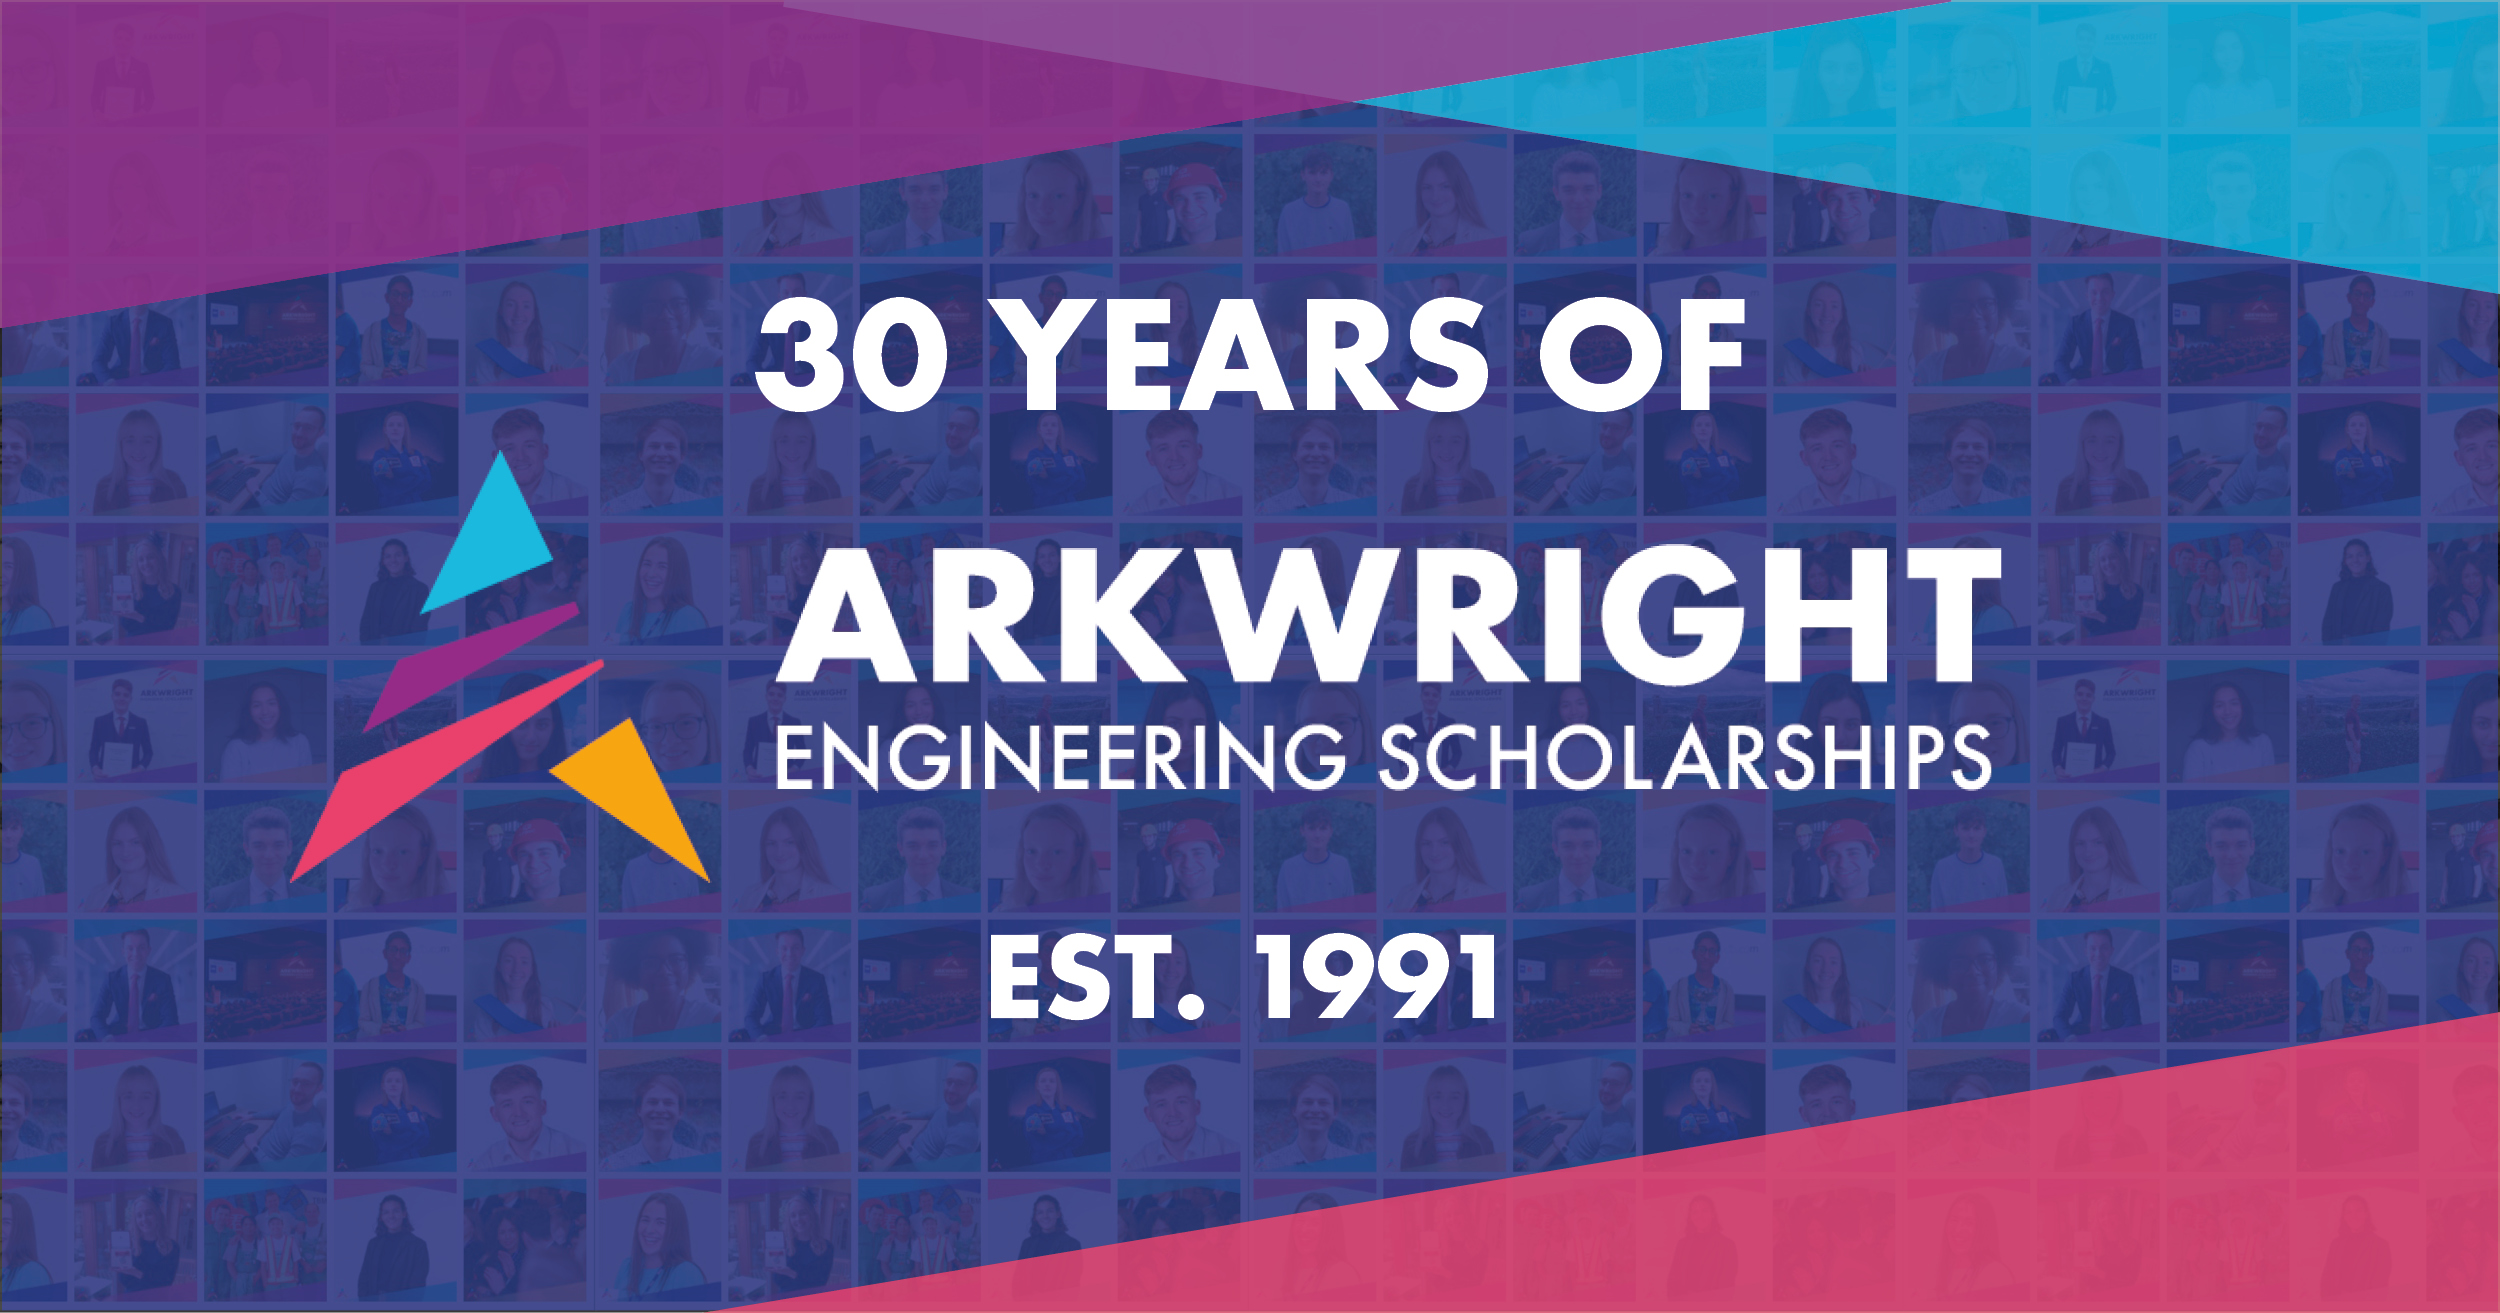 Arkwright Engineering Scholarships: Celebrating 30 Years